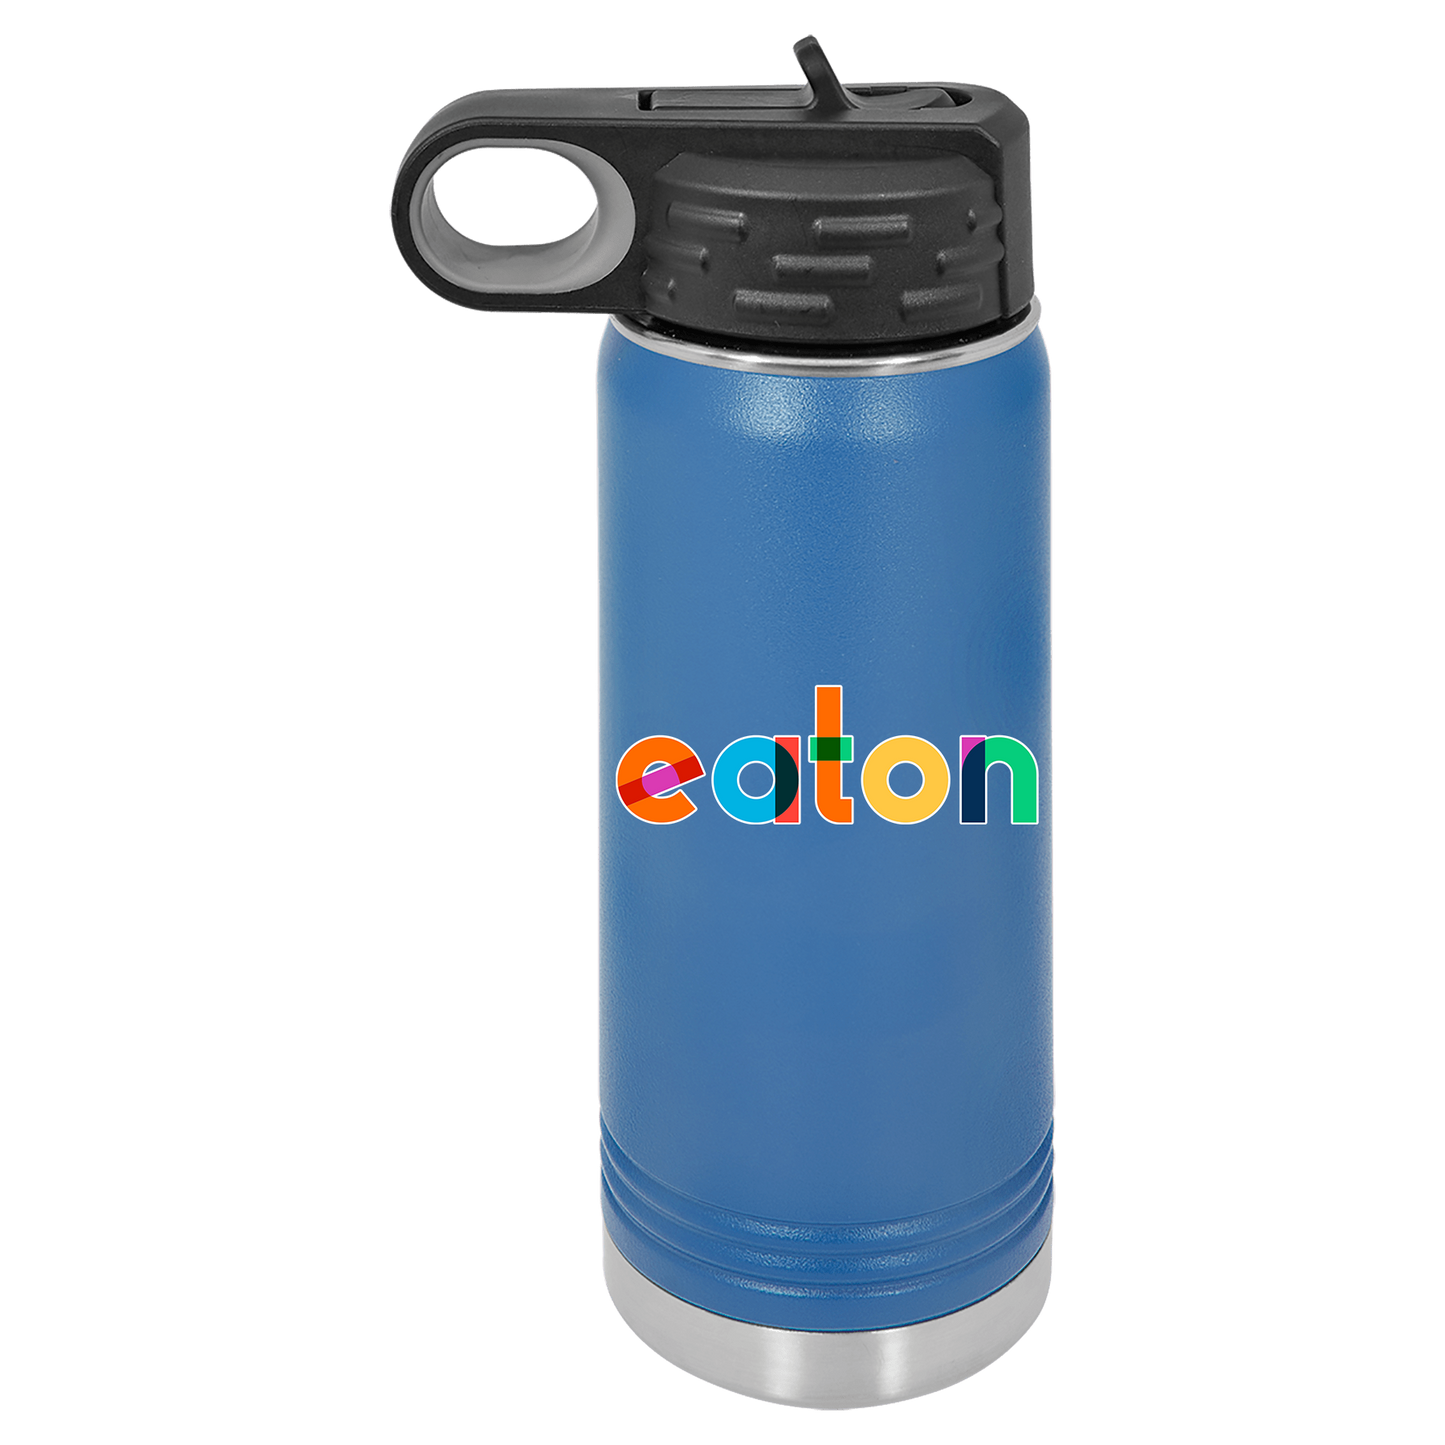 Colorful Eaton Water Bottle 20 oz